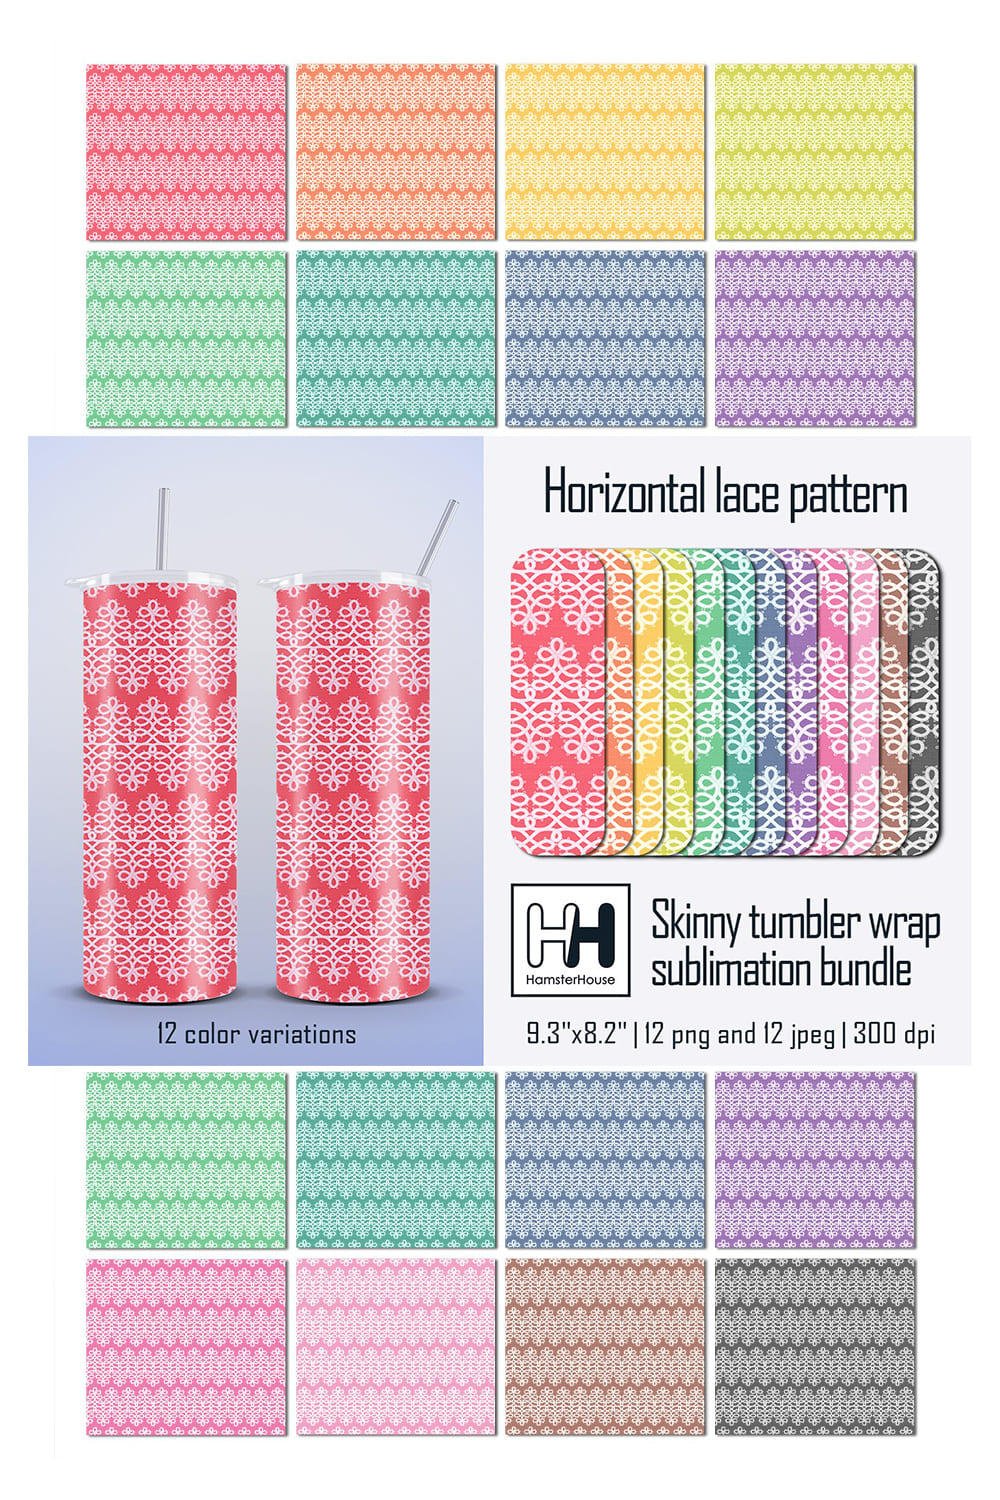 Horizontal Lace Pattern, Skinny Tumbler Wrap Sublimation - Pinterest.